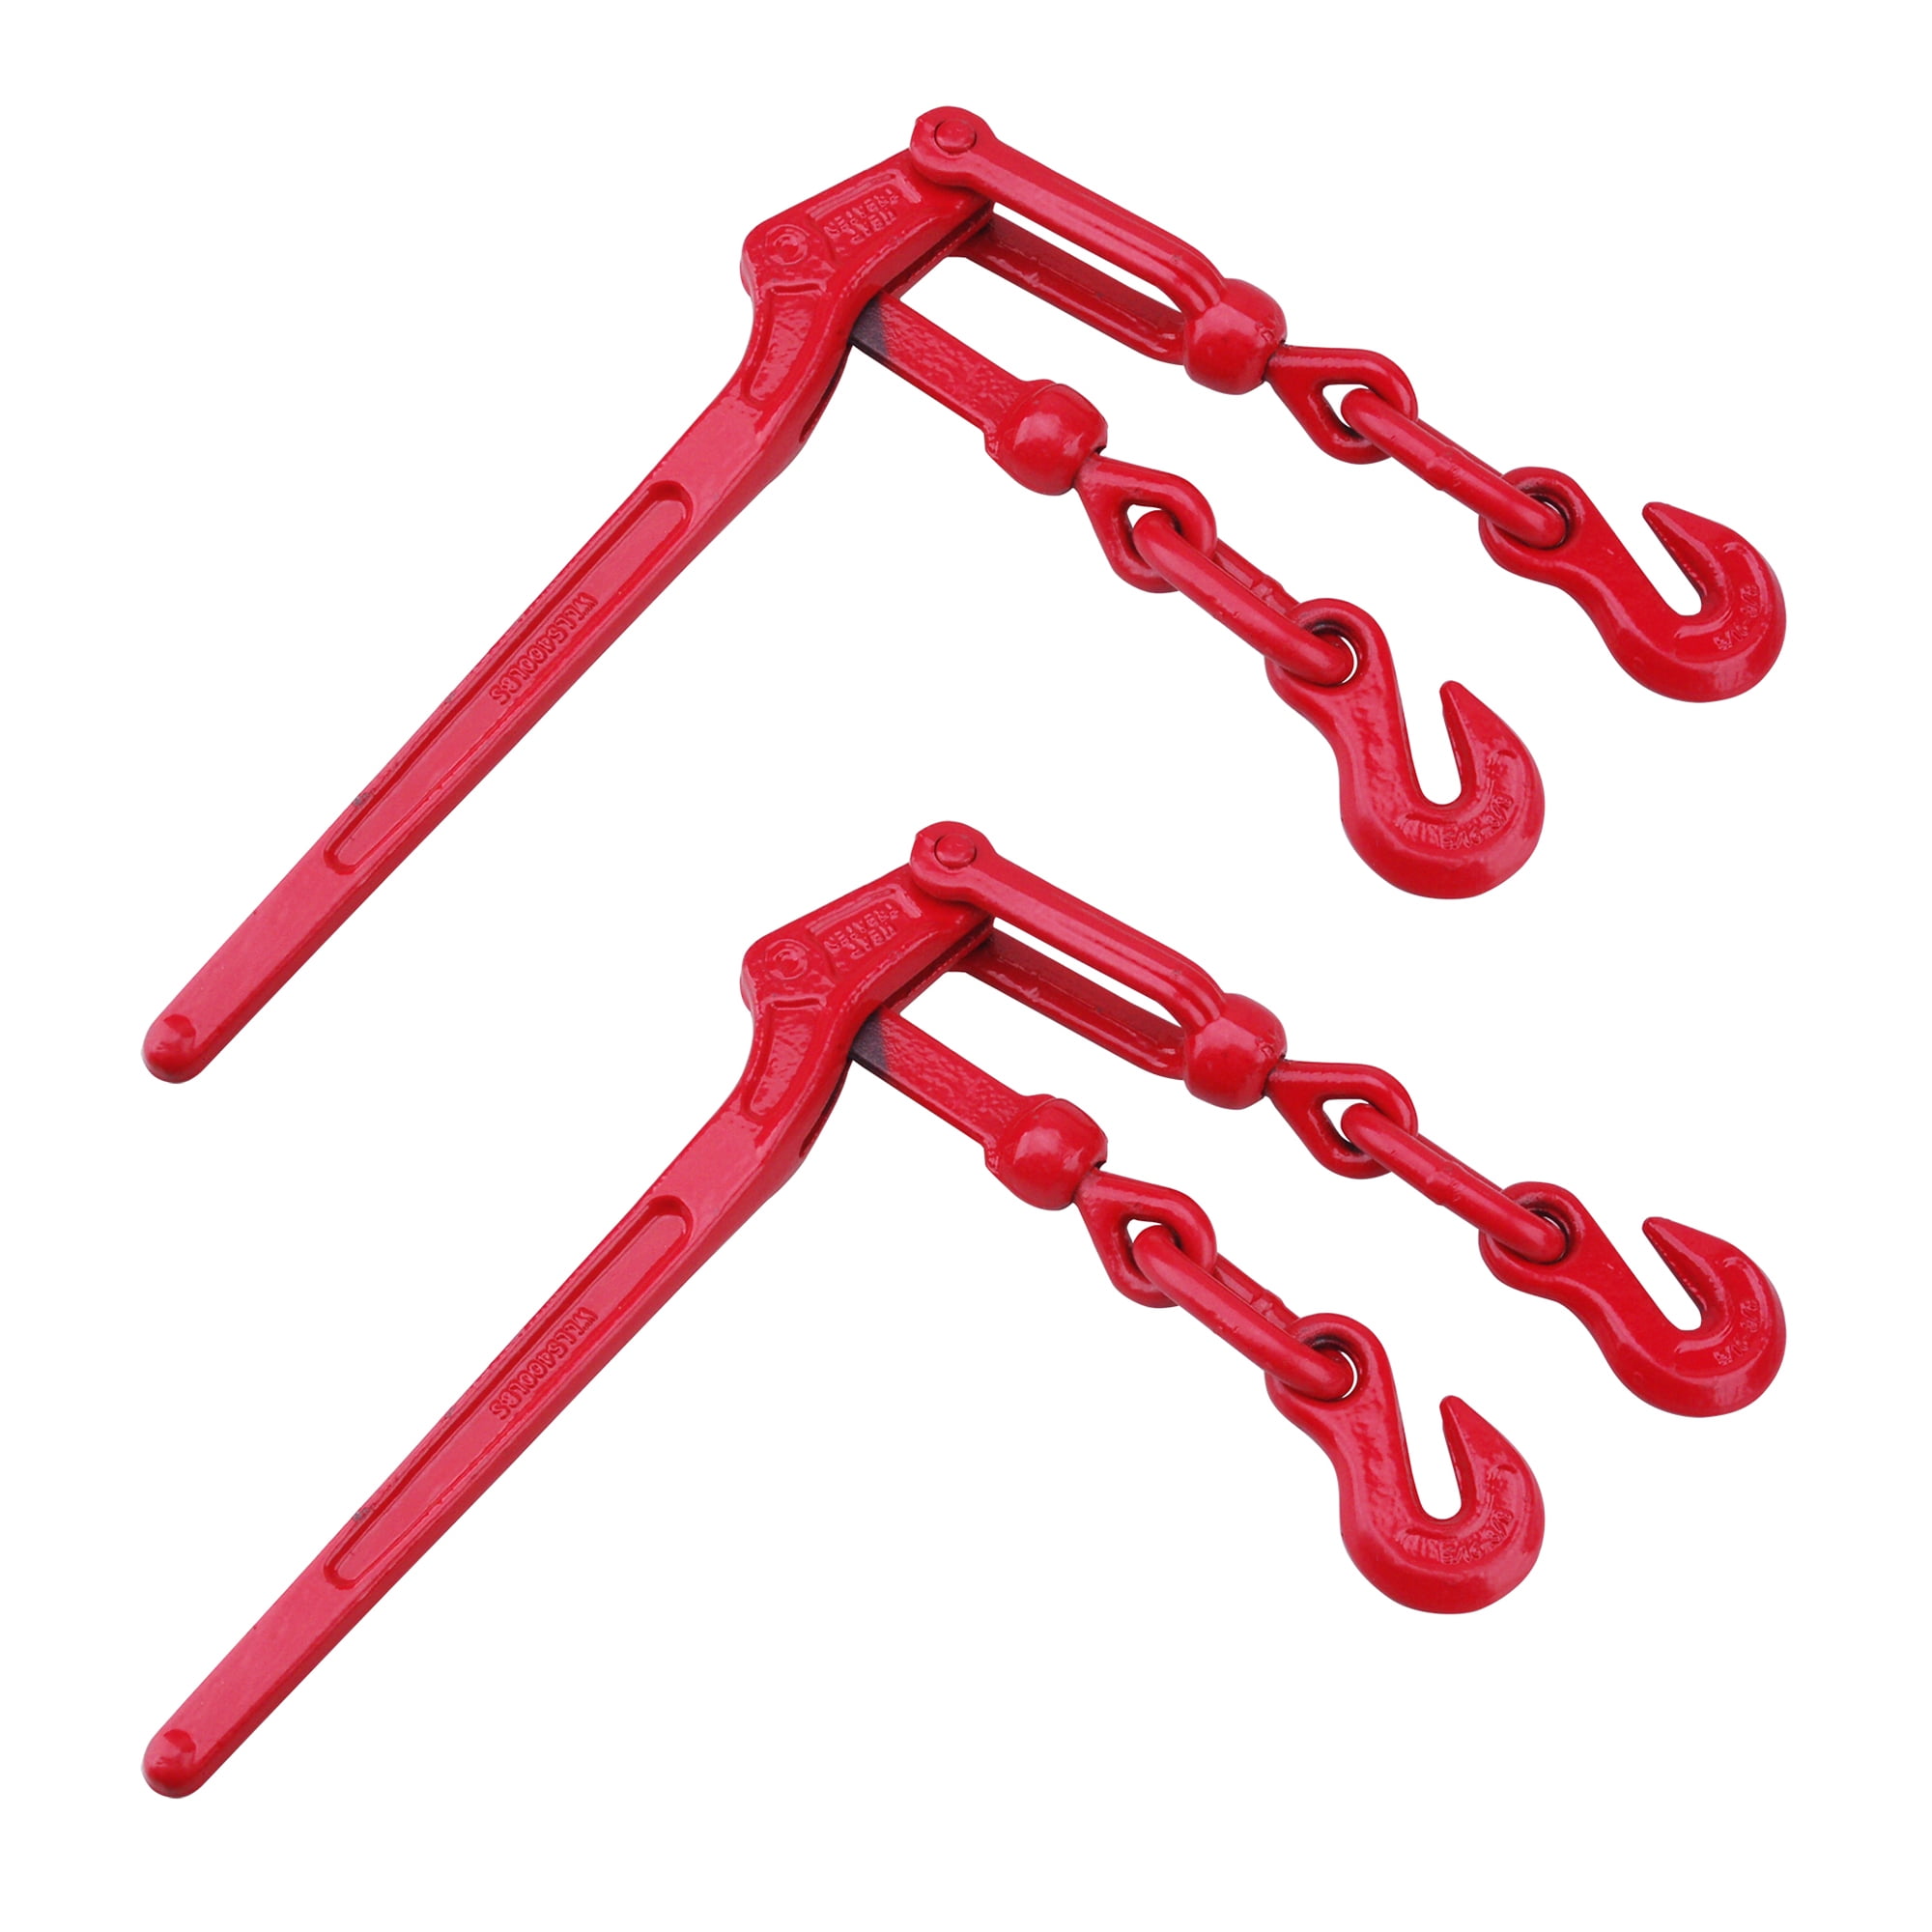 VEVOR 3 Ton Chain Binder Ratchet Load Binder 5/16''-3/8'' for Tie Down 2PCS 